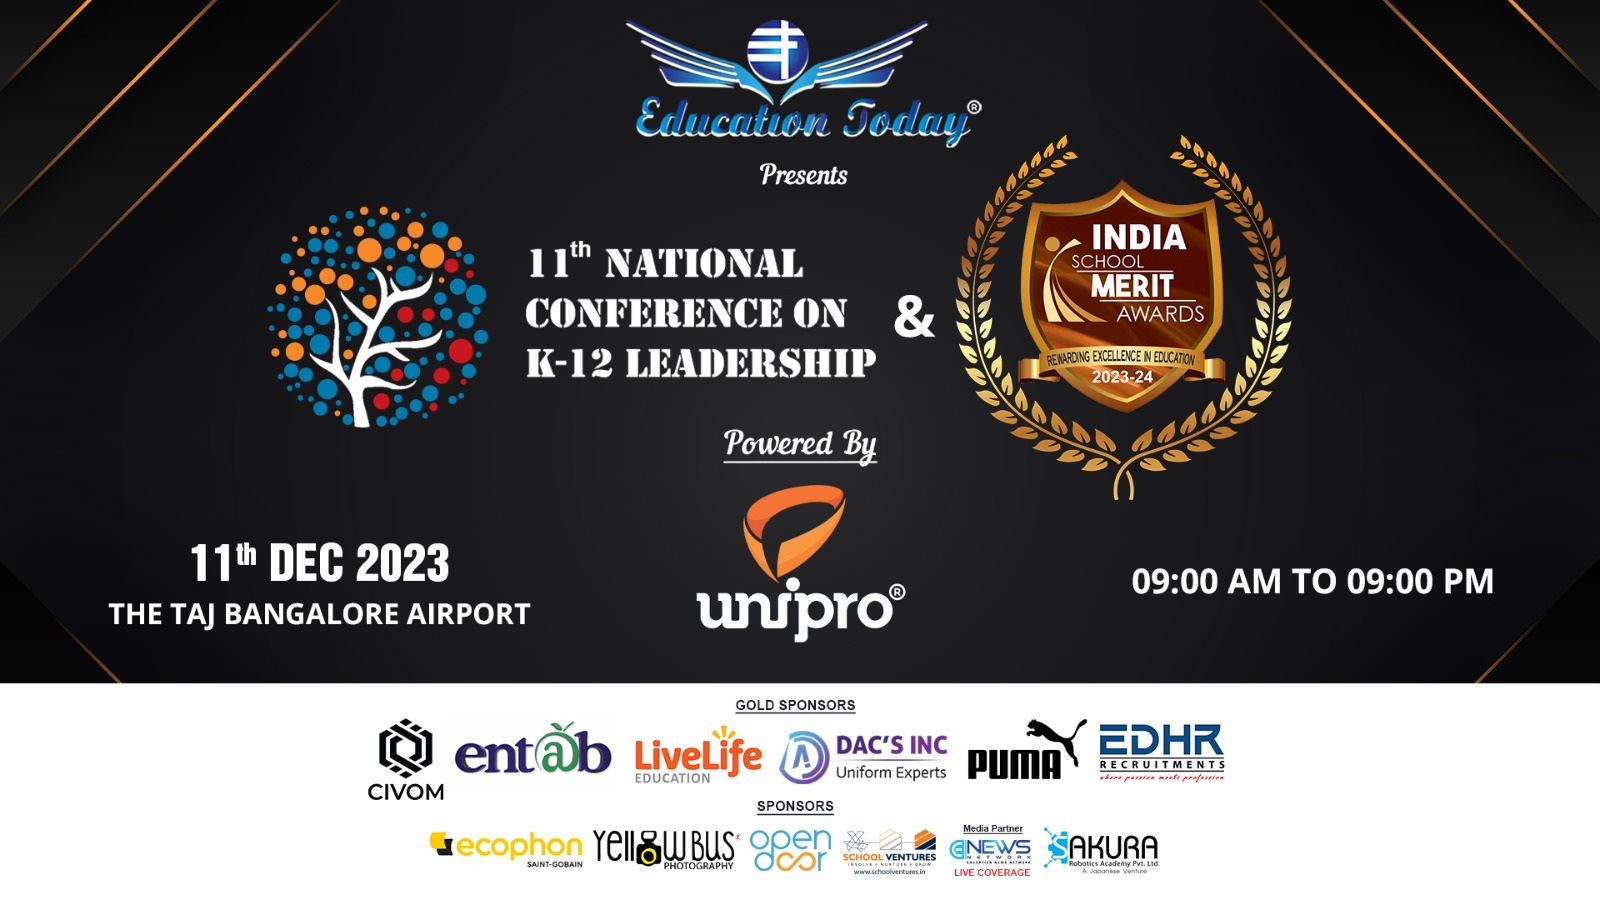 11th National Conference on K-12 Leadership & School Merit Awards 2023, Bangalore, Karnataka, India